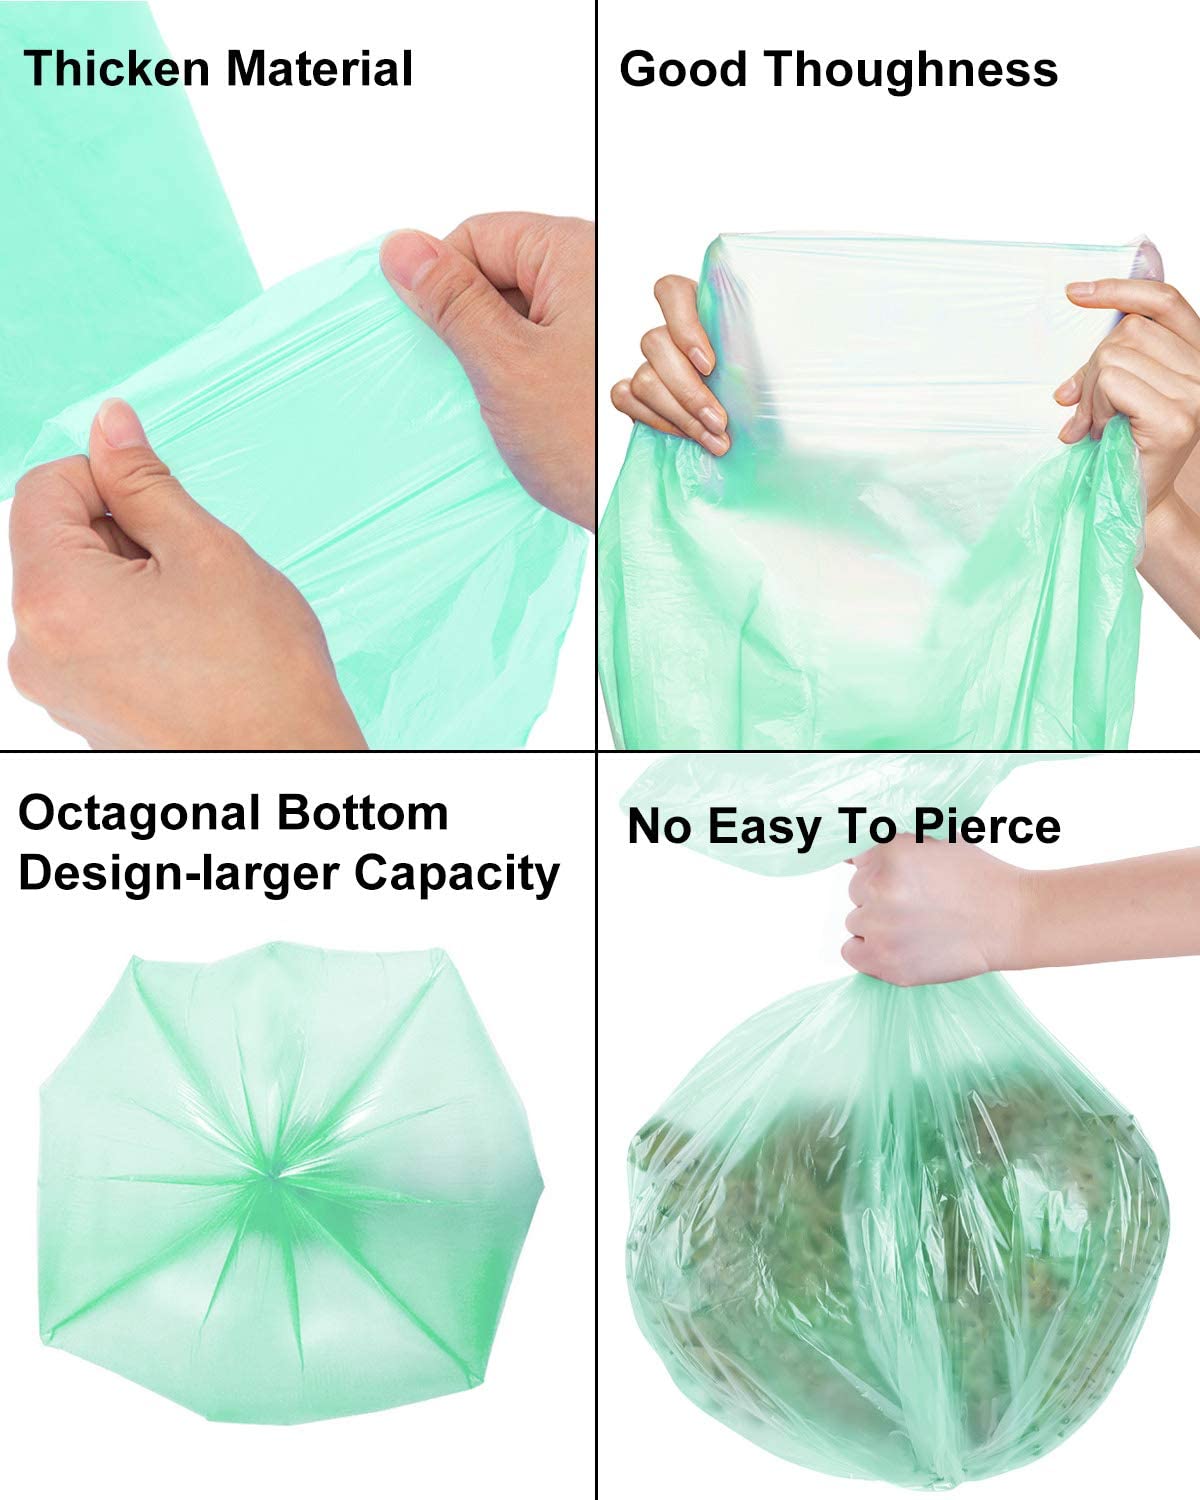 13 Gallon Biodegradable Trash Bags  Store 